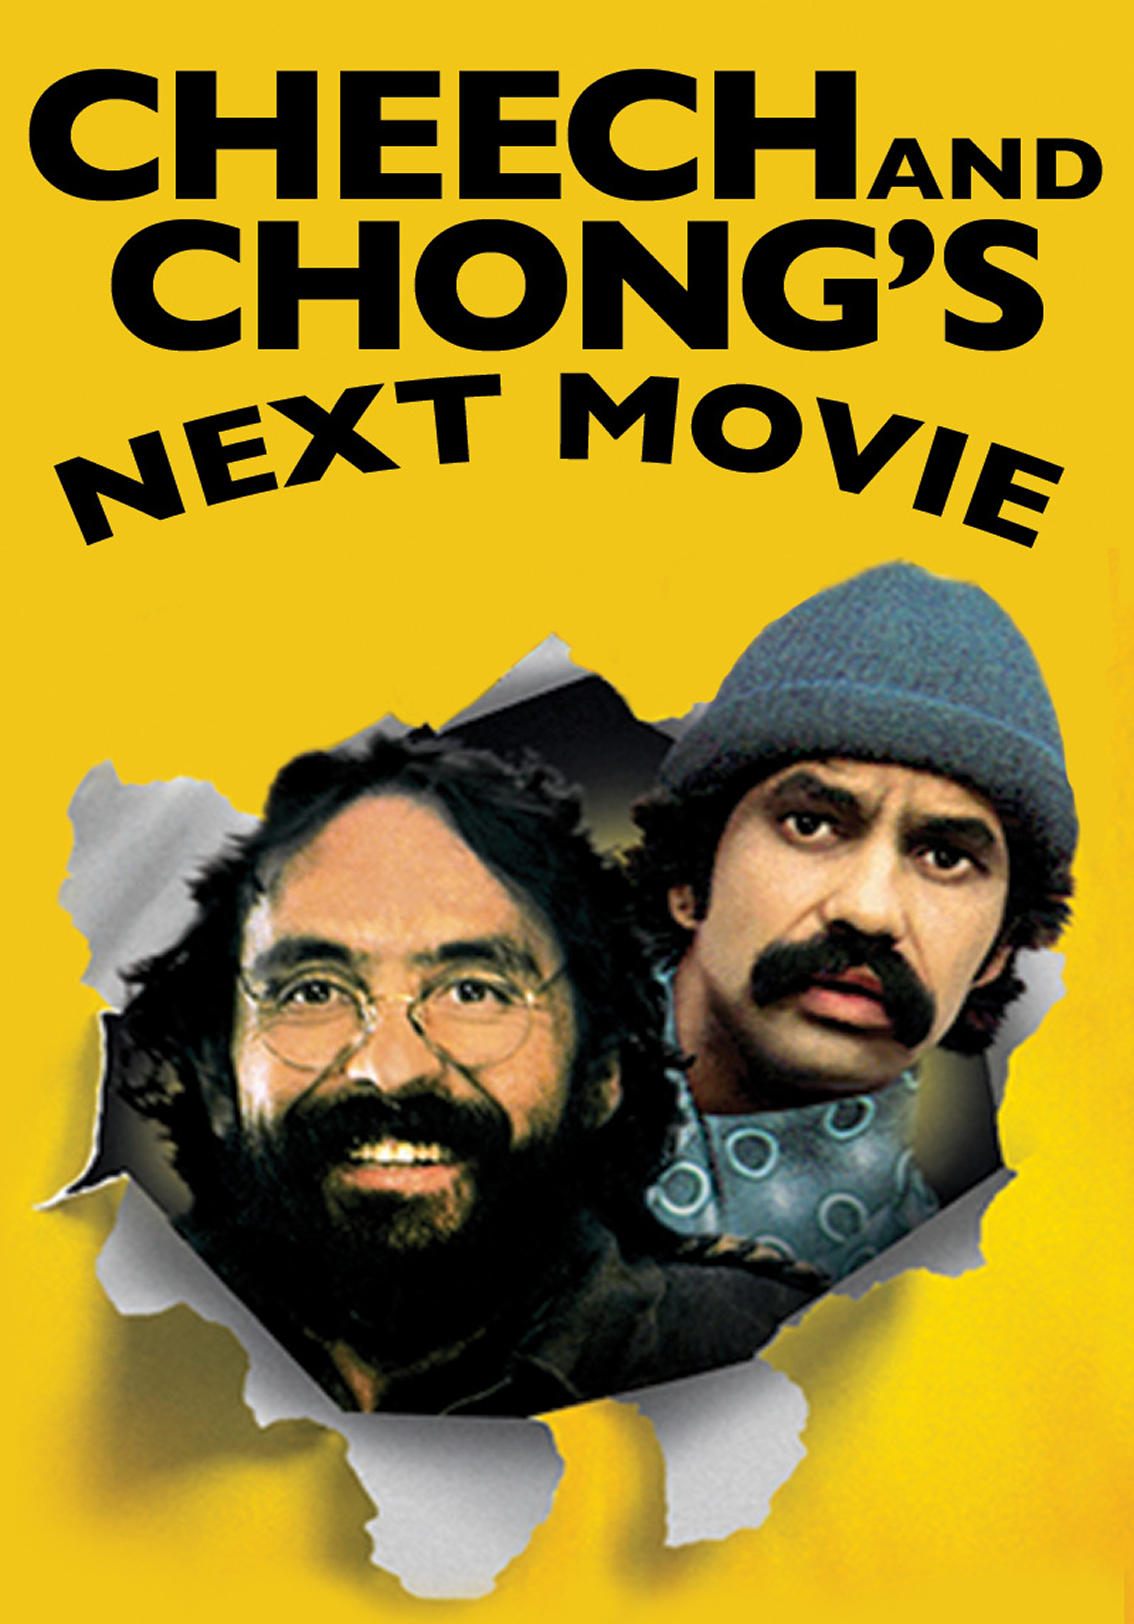 Cheech and Chong's Next Movie.